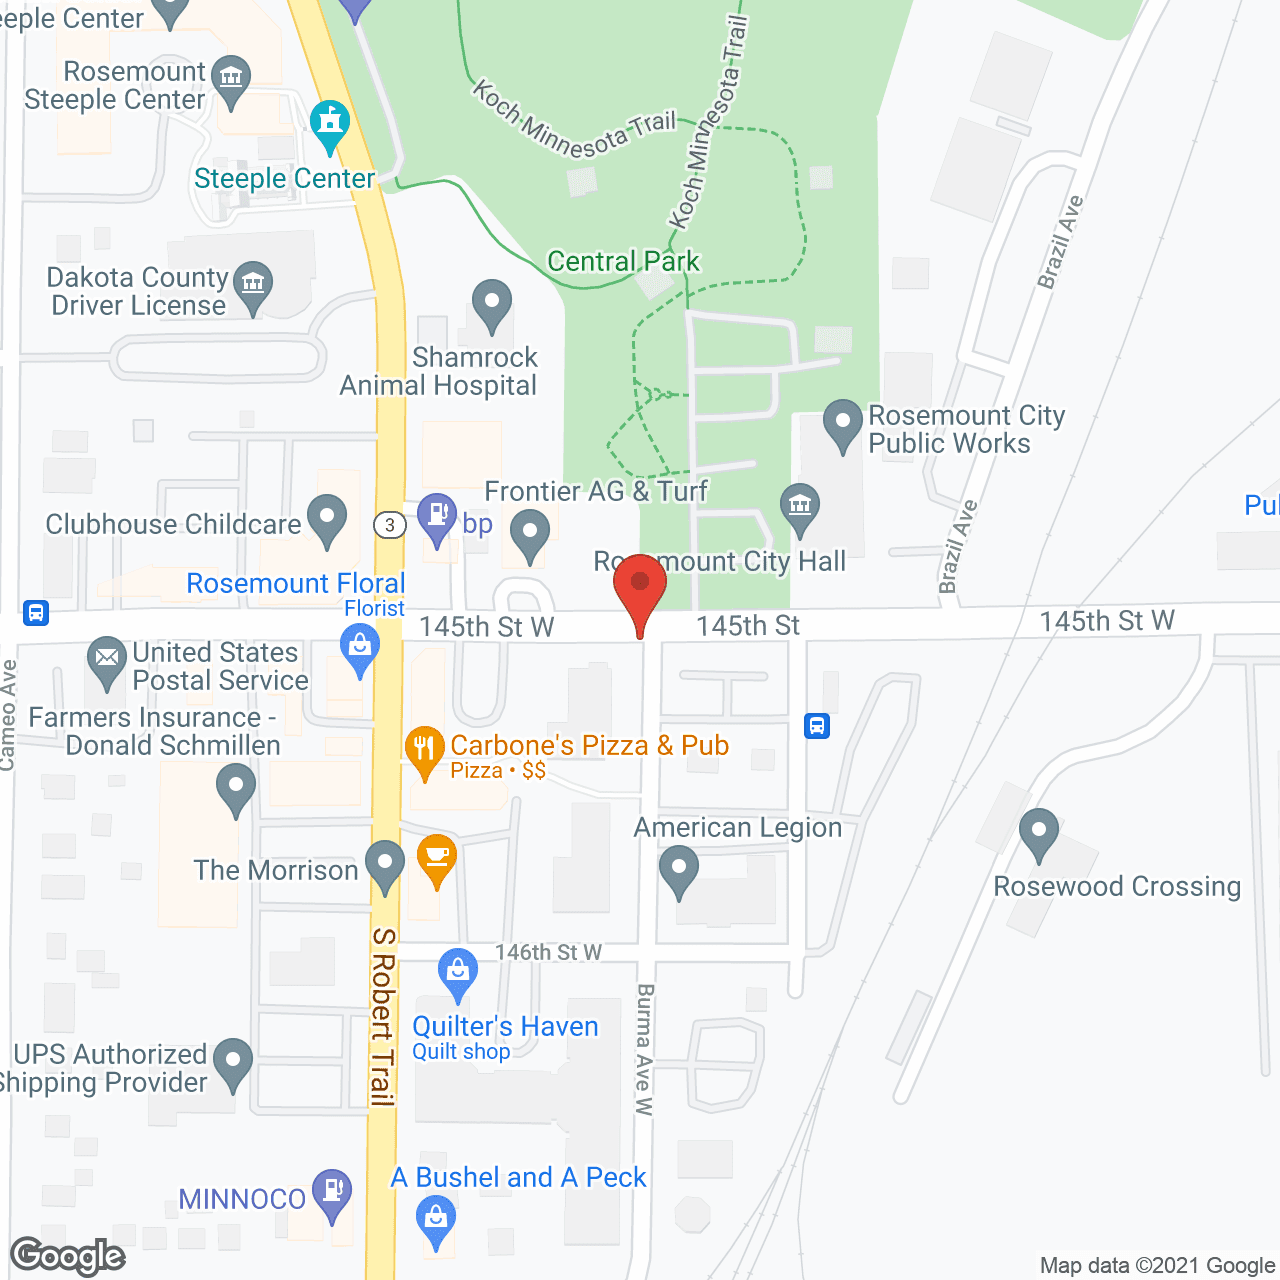 Rosemount Plaza in google map